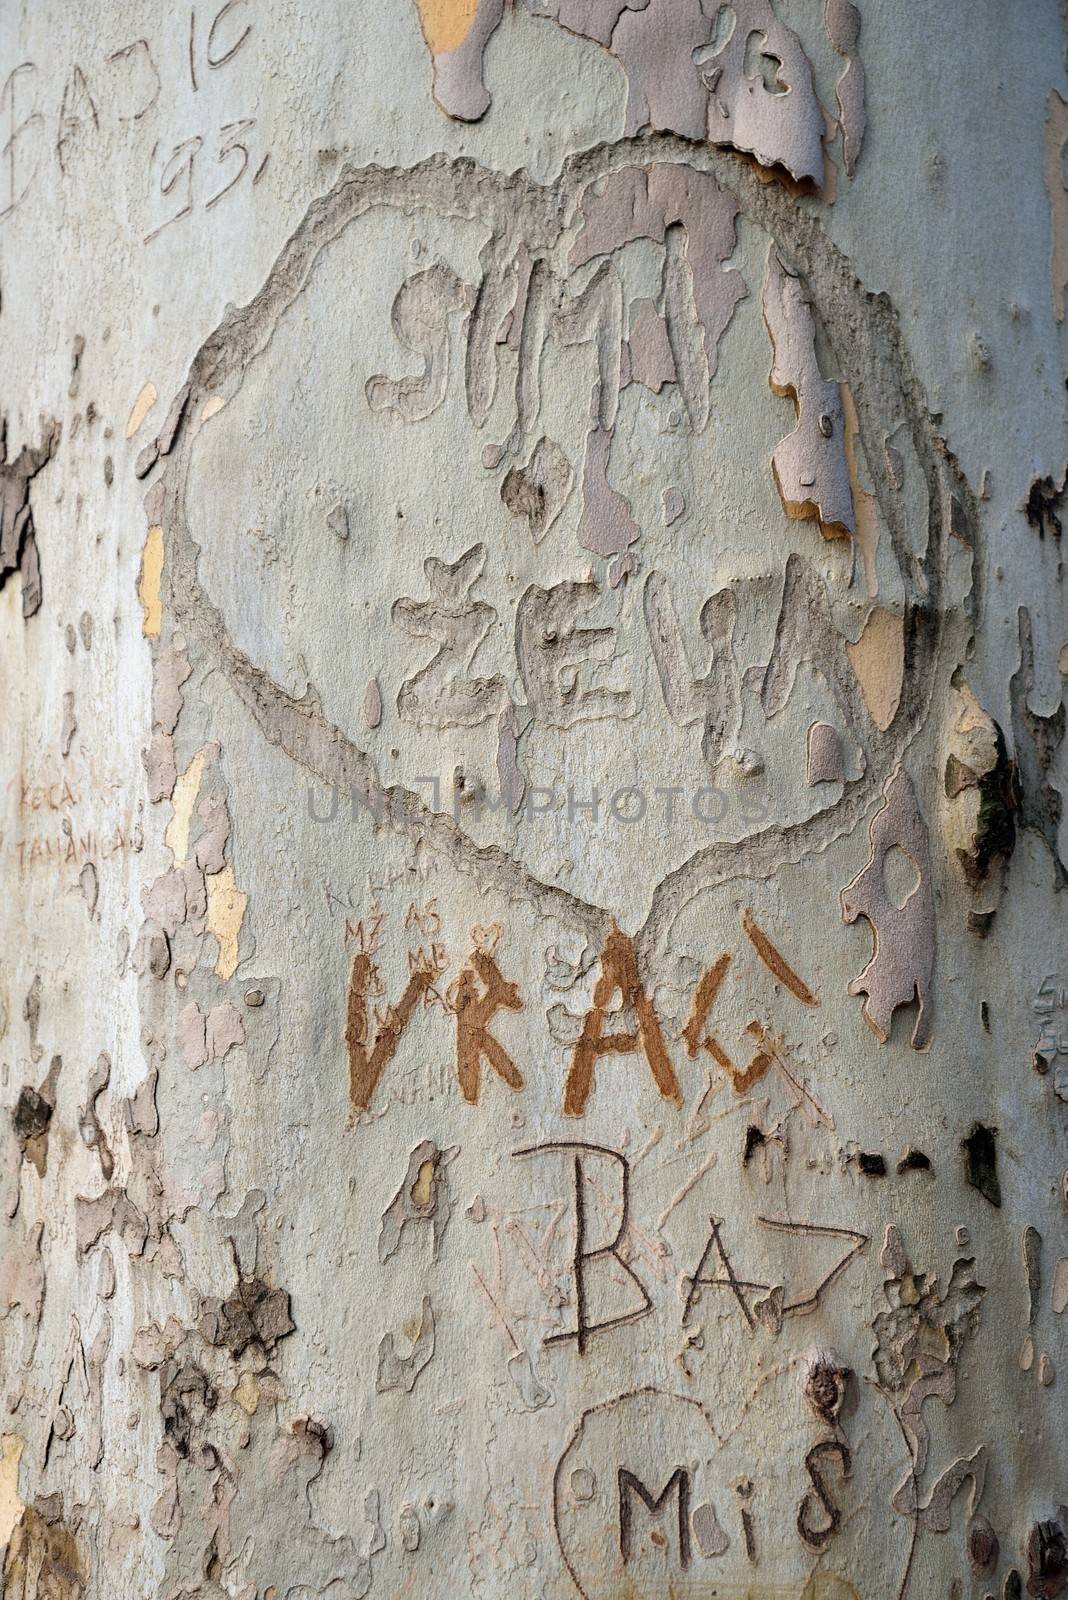 Message on bark tree by zagart36